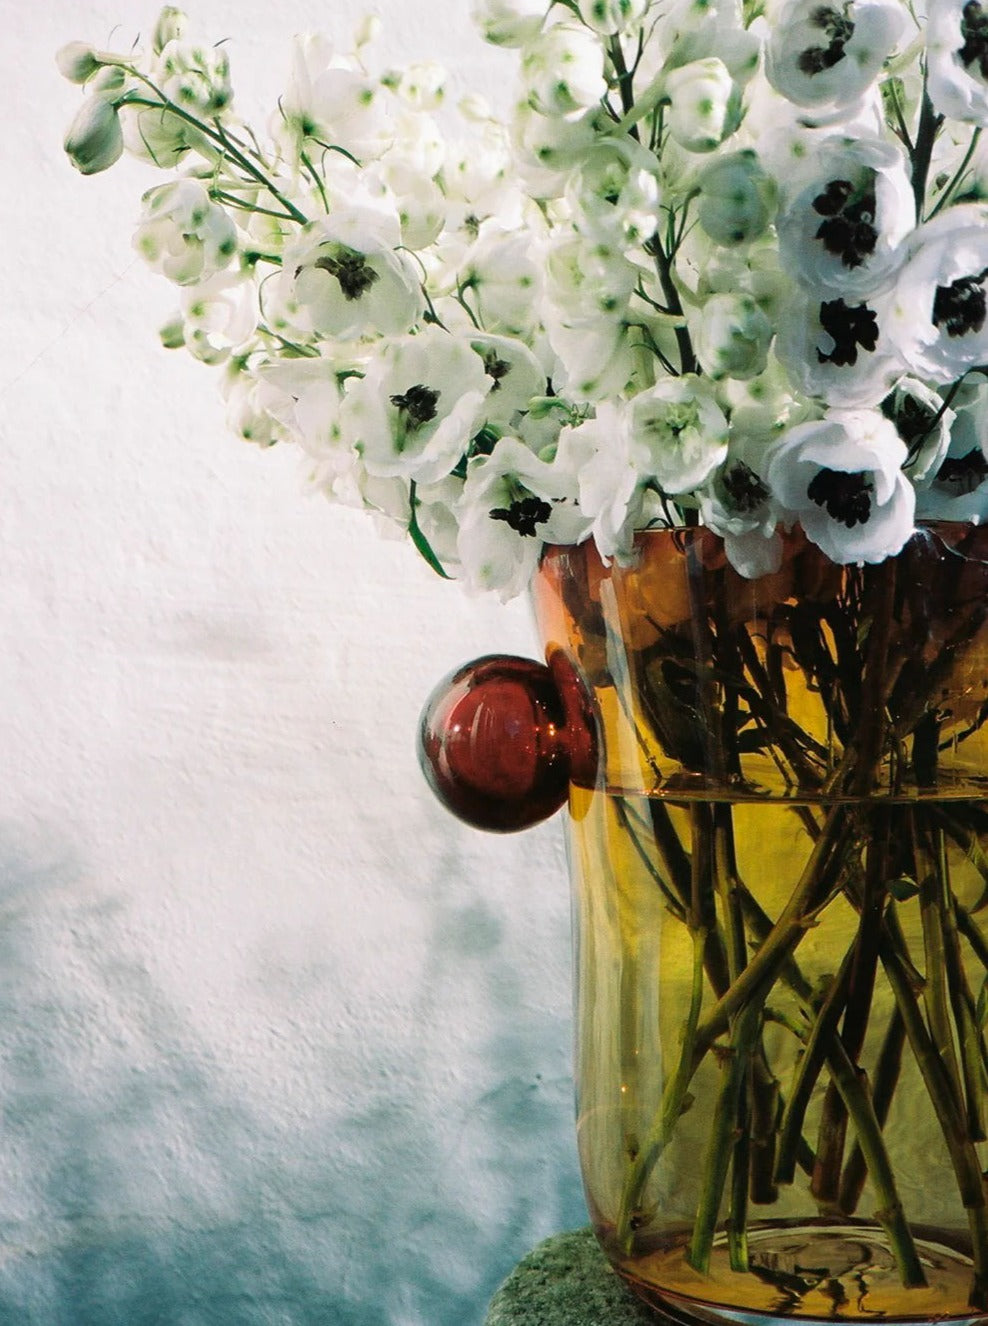 Beautiful handblown vase with a sleek and modern design